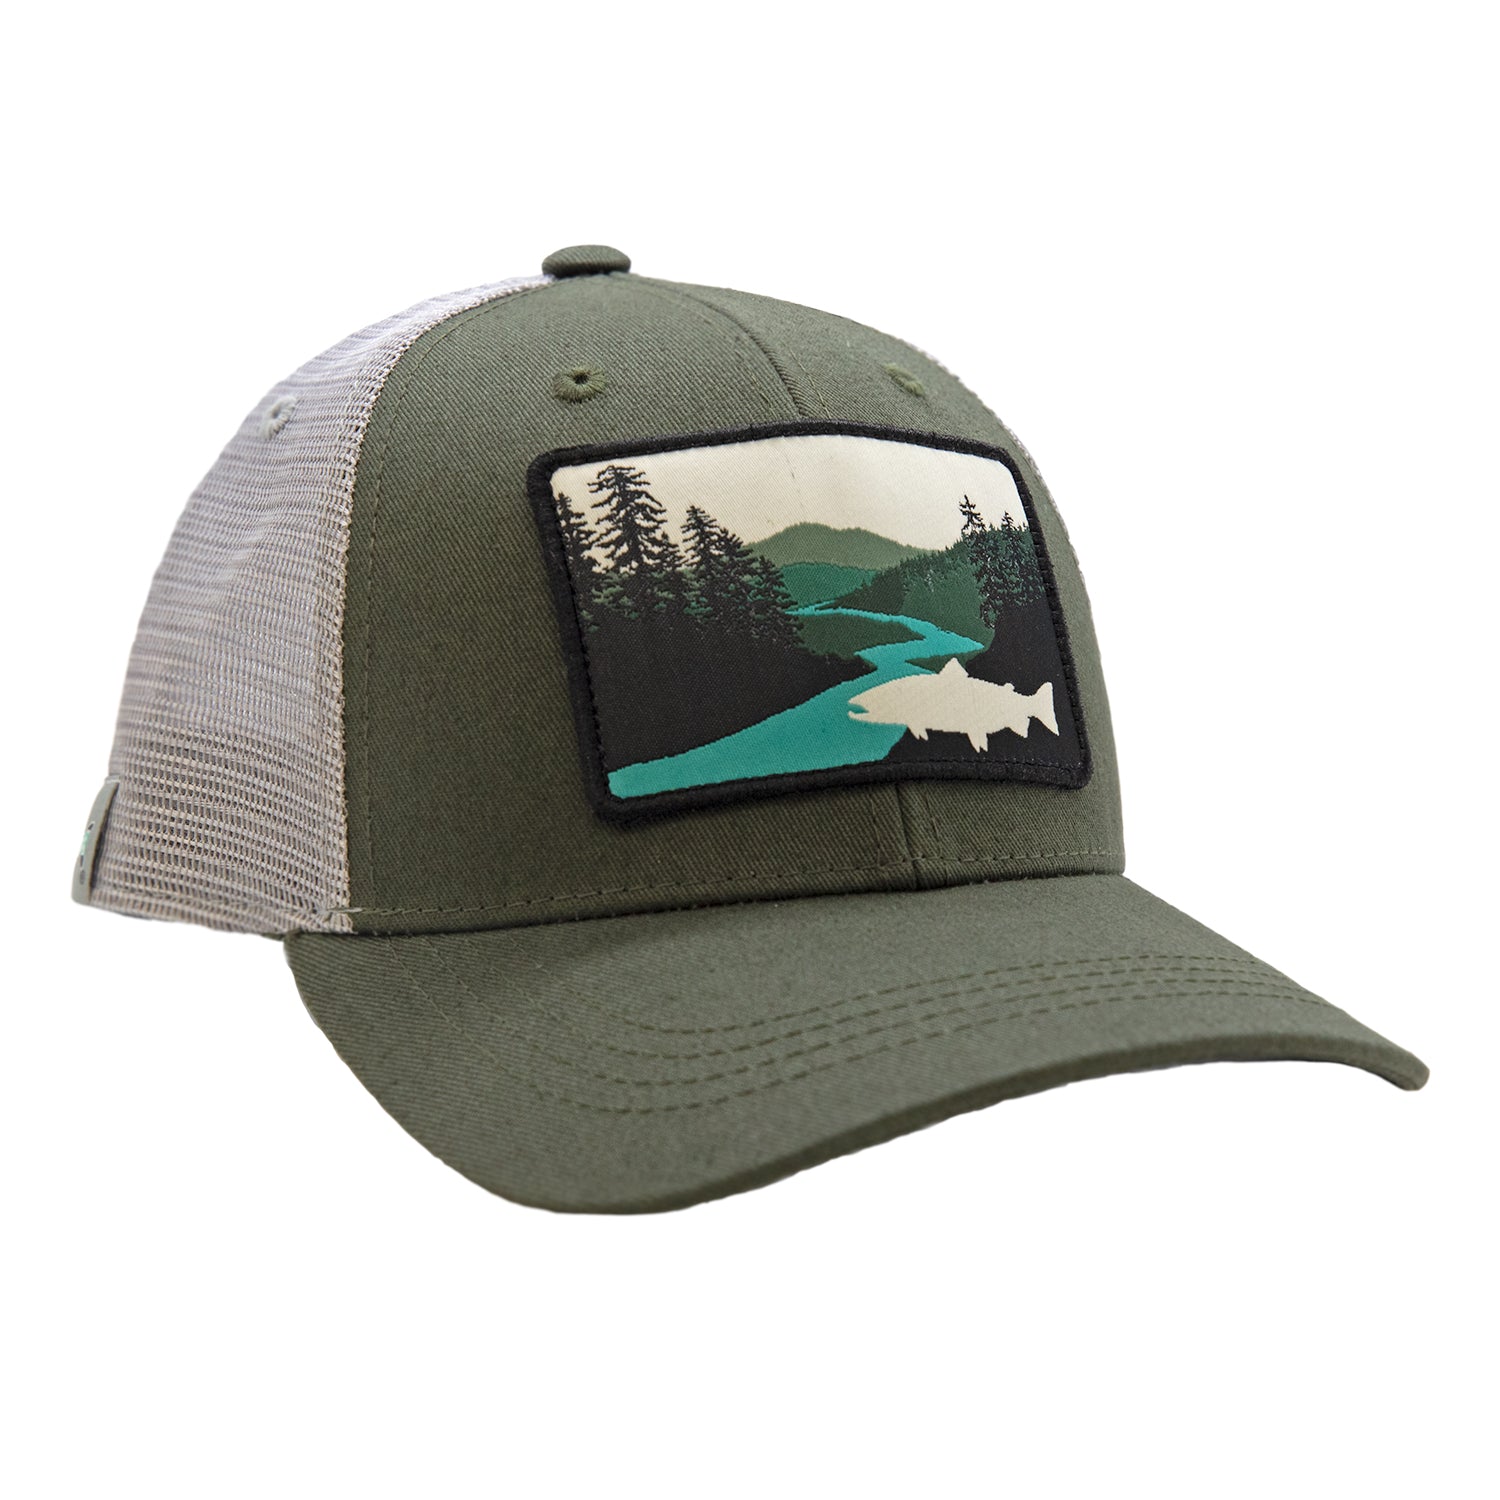 RepYourWater Idaho Cutthroat Mesh Back Hat